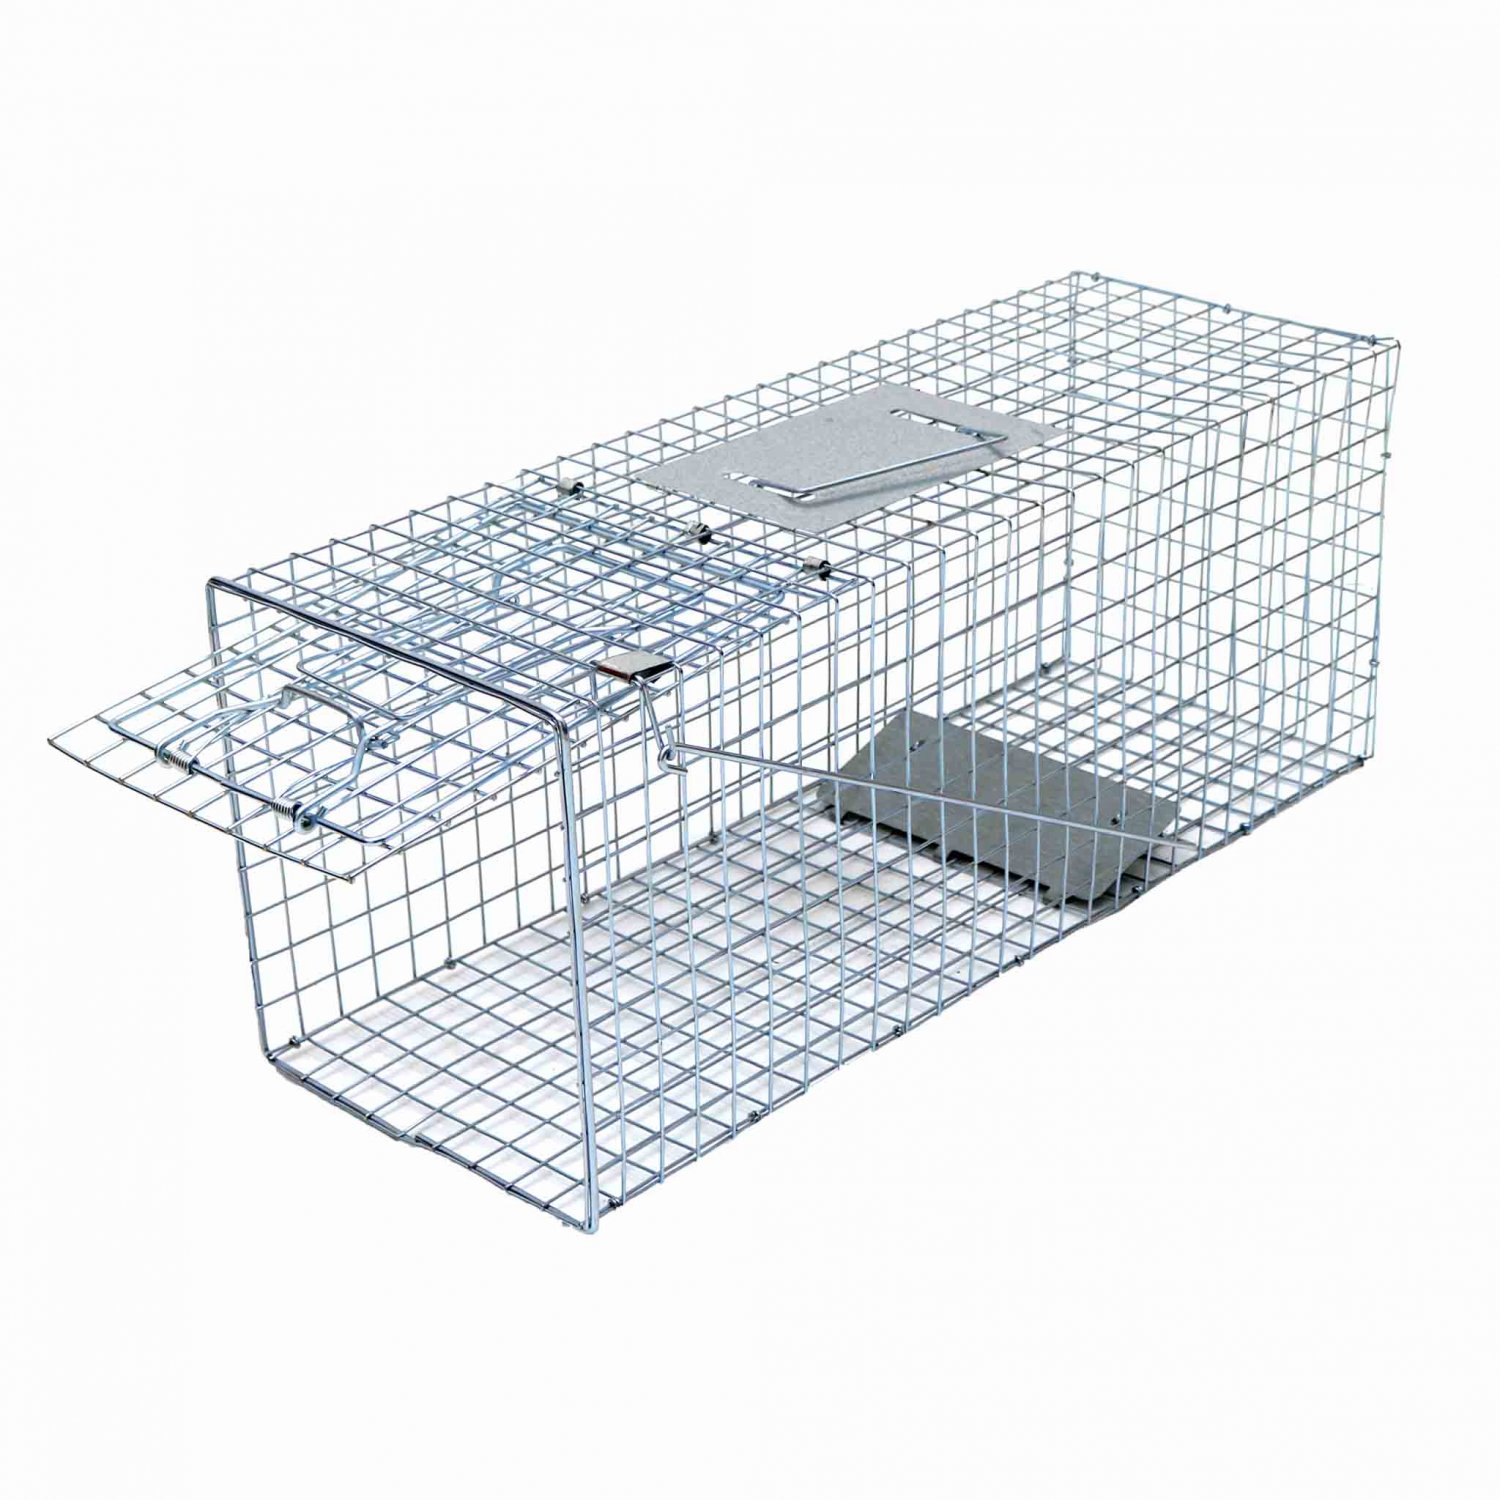 Large Humane Animal Rodent Rat Pest Trap Cage - 66 x 23 x 26cm